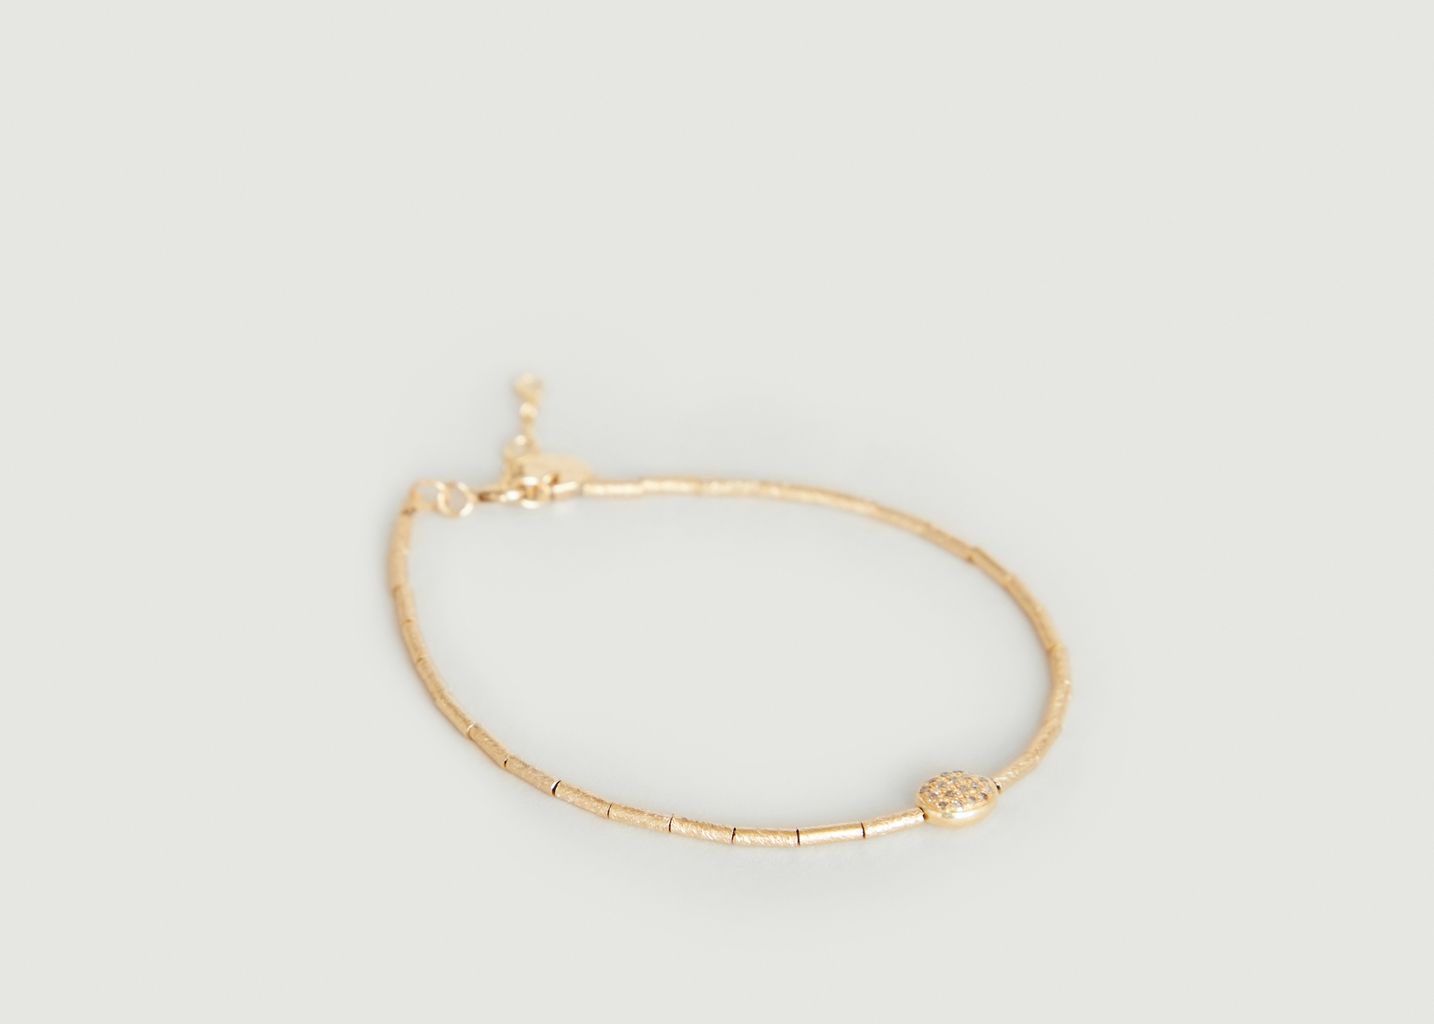 Artus small gold bracelet - 5 Octobre